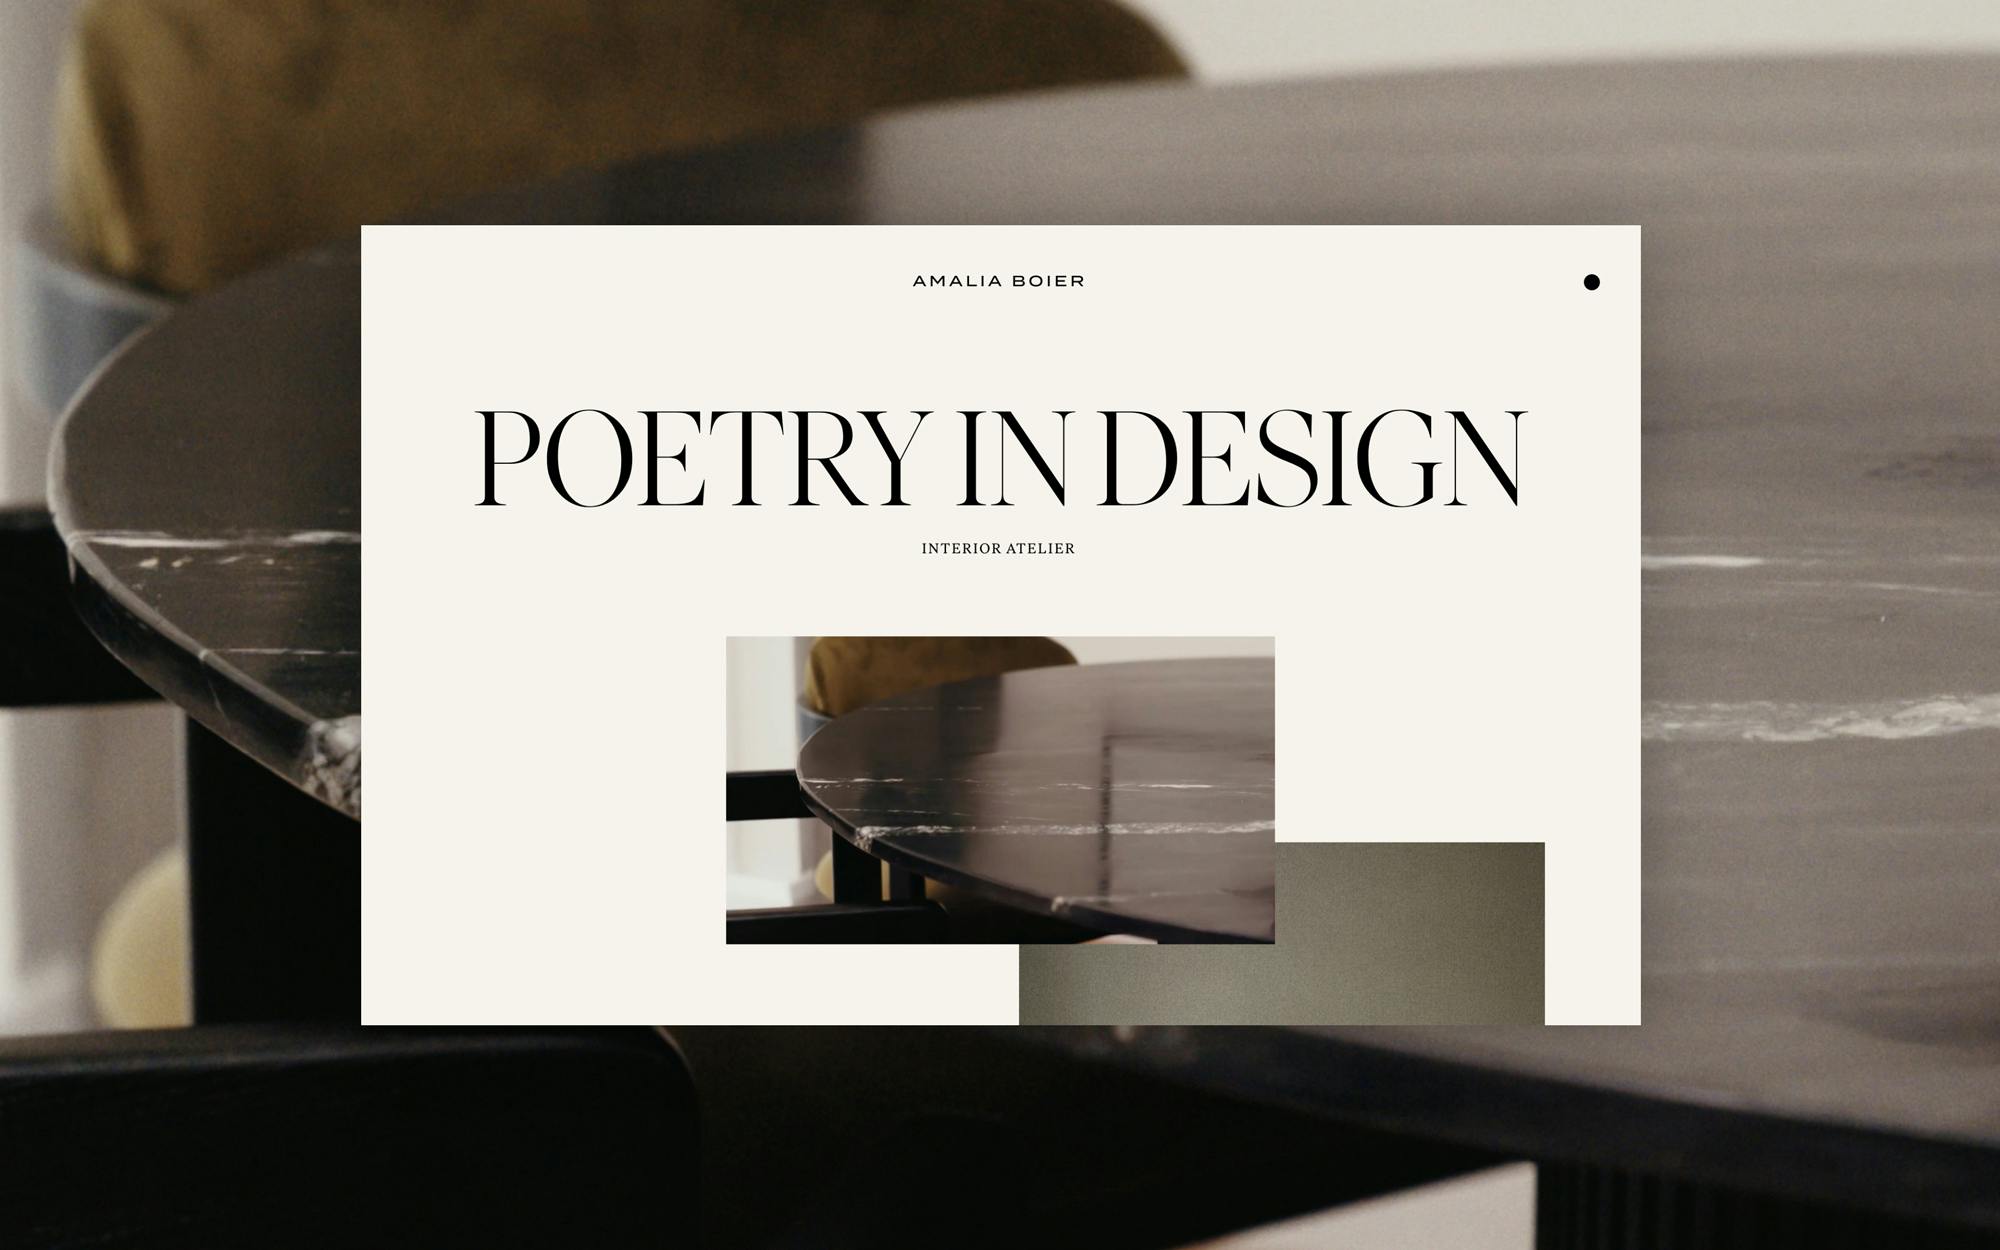 Website for Interior Designer Amalia Boier, designed by Extract Studio